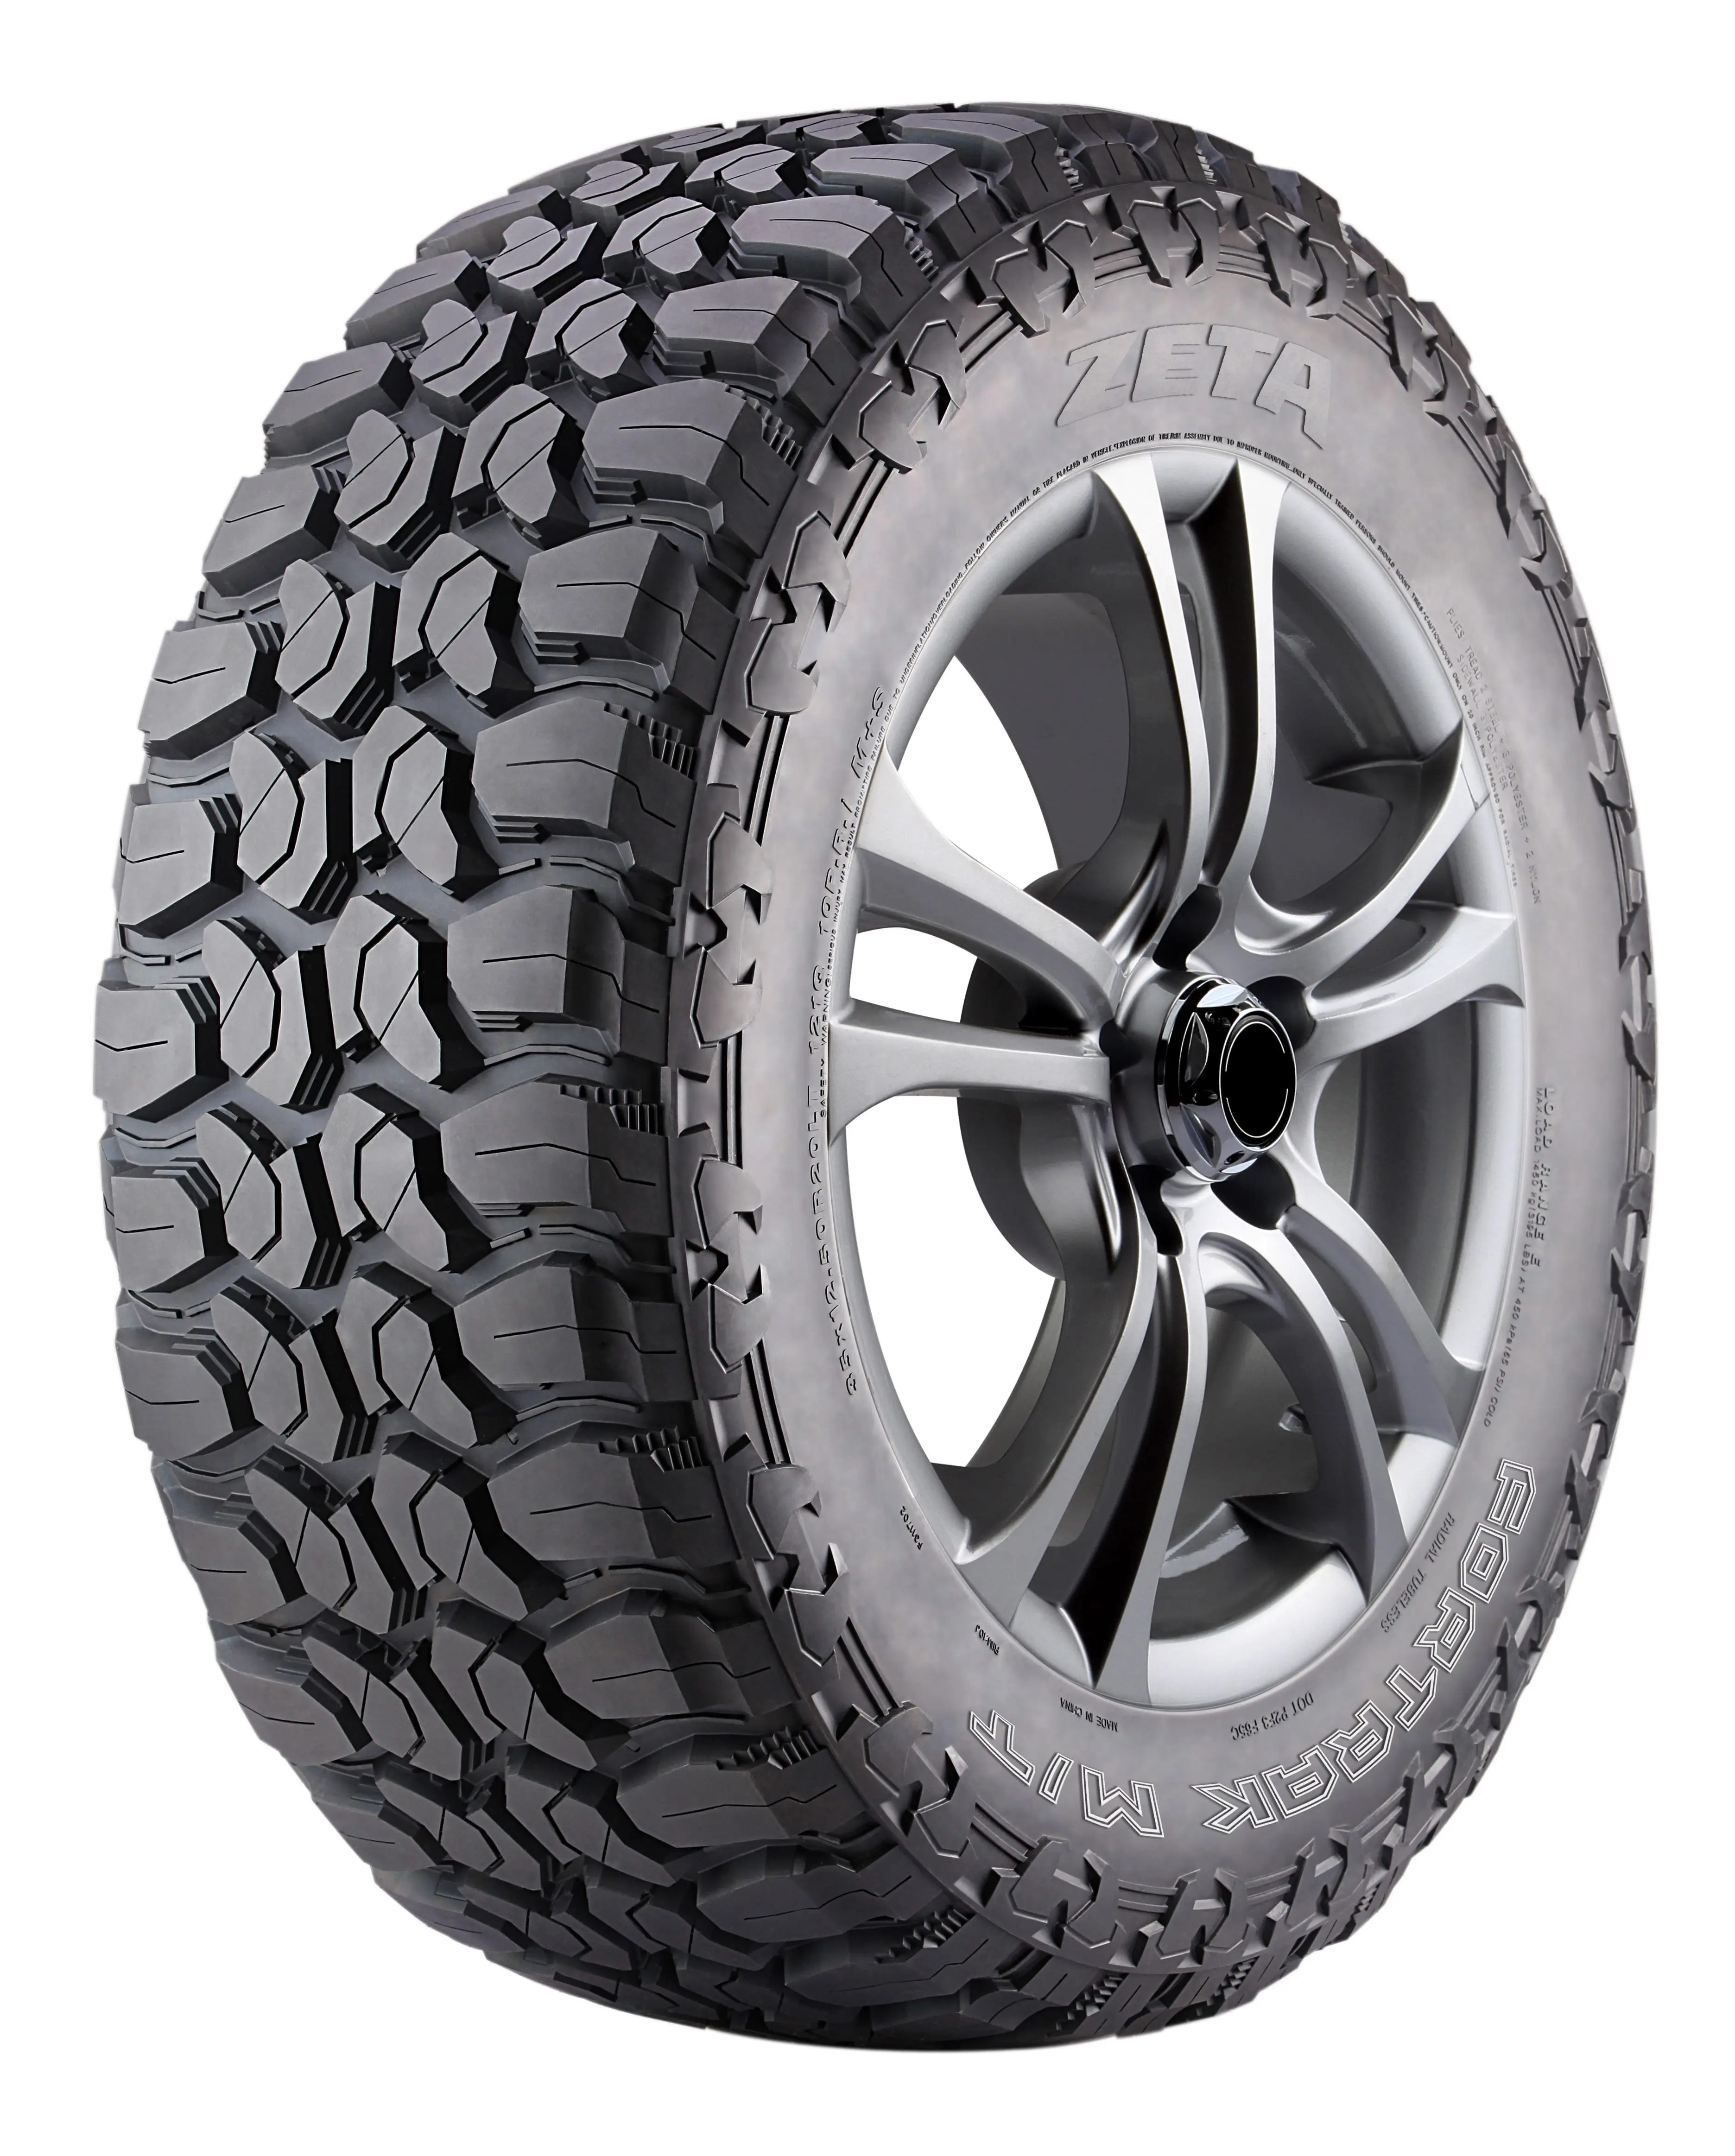 BEST 4X4 Off Road Tyre Mud& Rock Terrain Tires Germany ZETA Global MT mud AT car Tires for sale